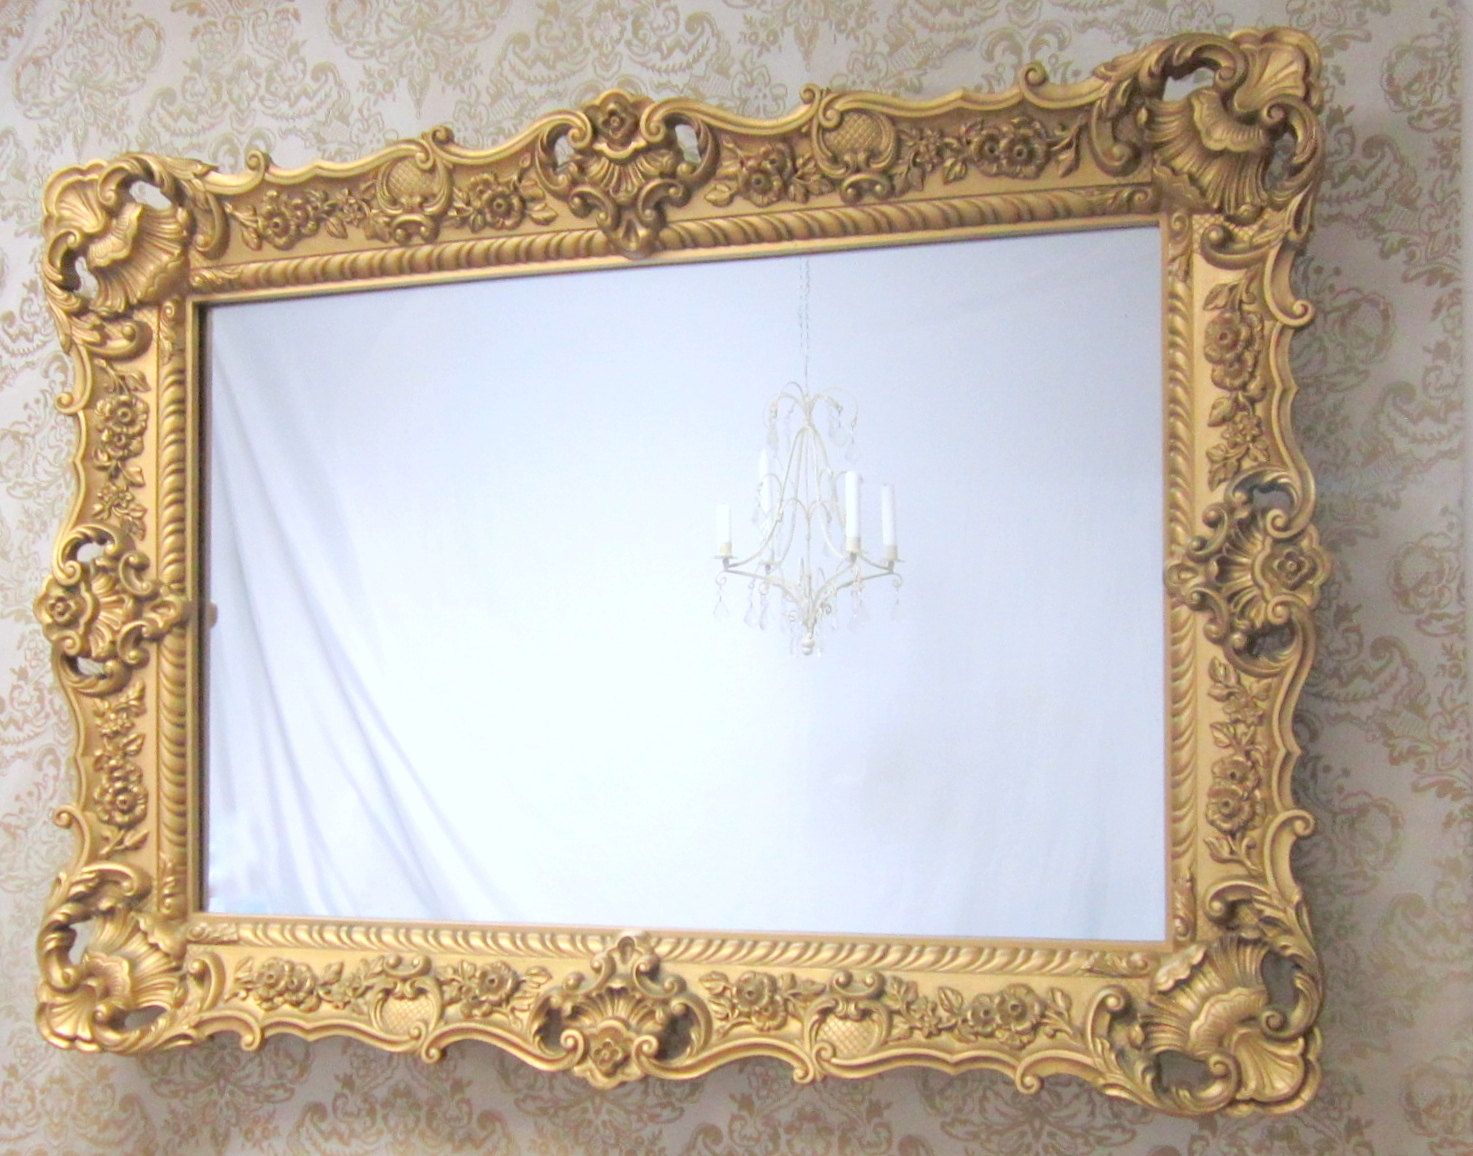 140 Best Images About Decorative Ornate Antique Vintage Mirrors Regarding Vintage Mirrors For Sale (View 4 of 15)